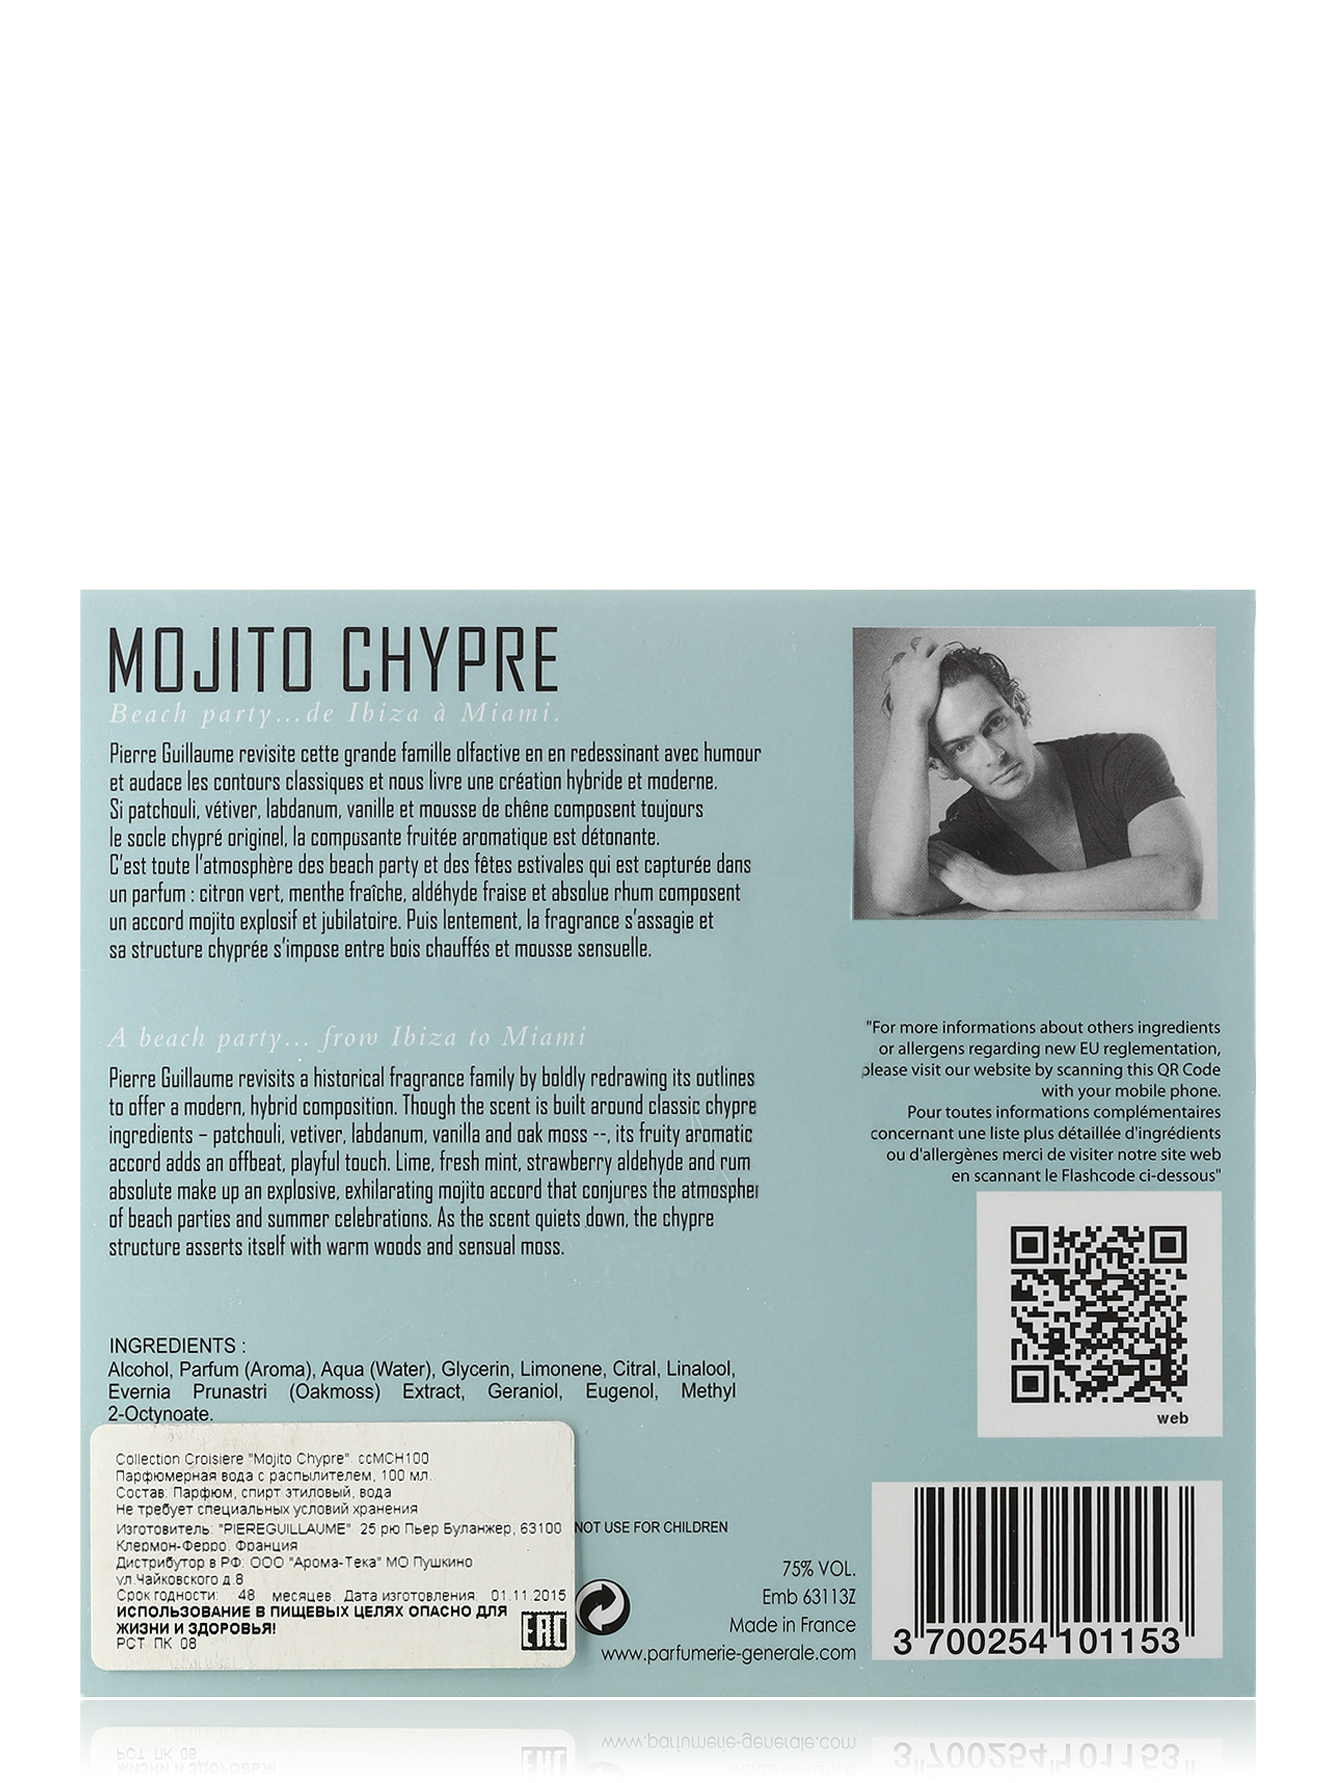  Туалетная вода - Mojito chypre Collection Croisiere, 100ml - Модель Верх-Низ